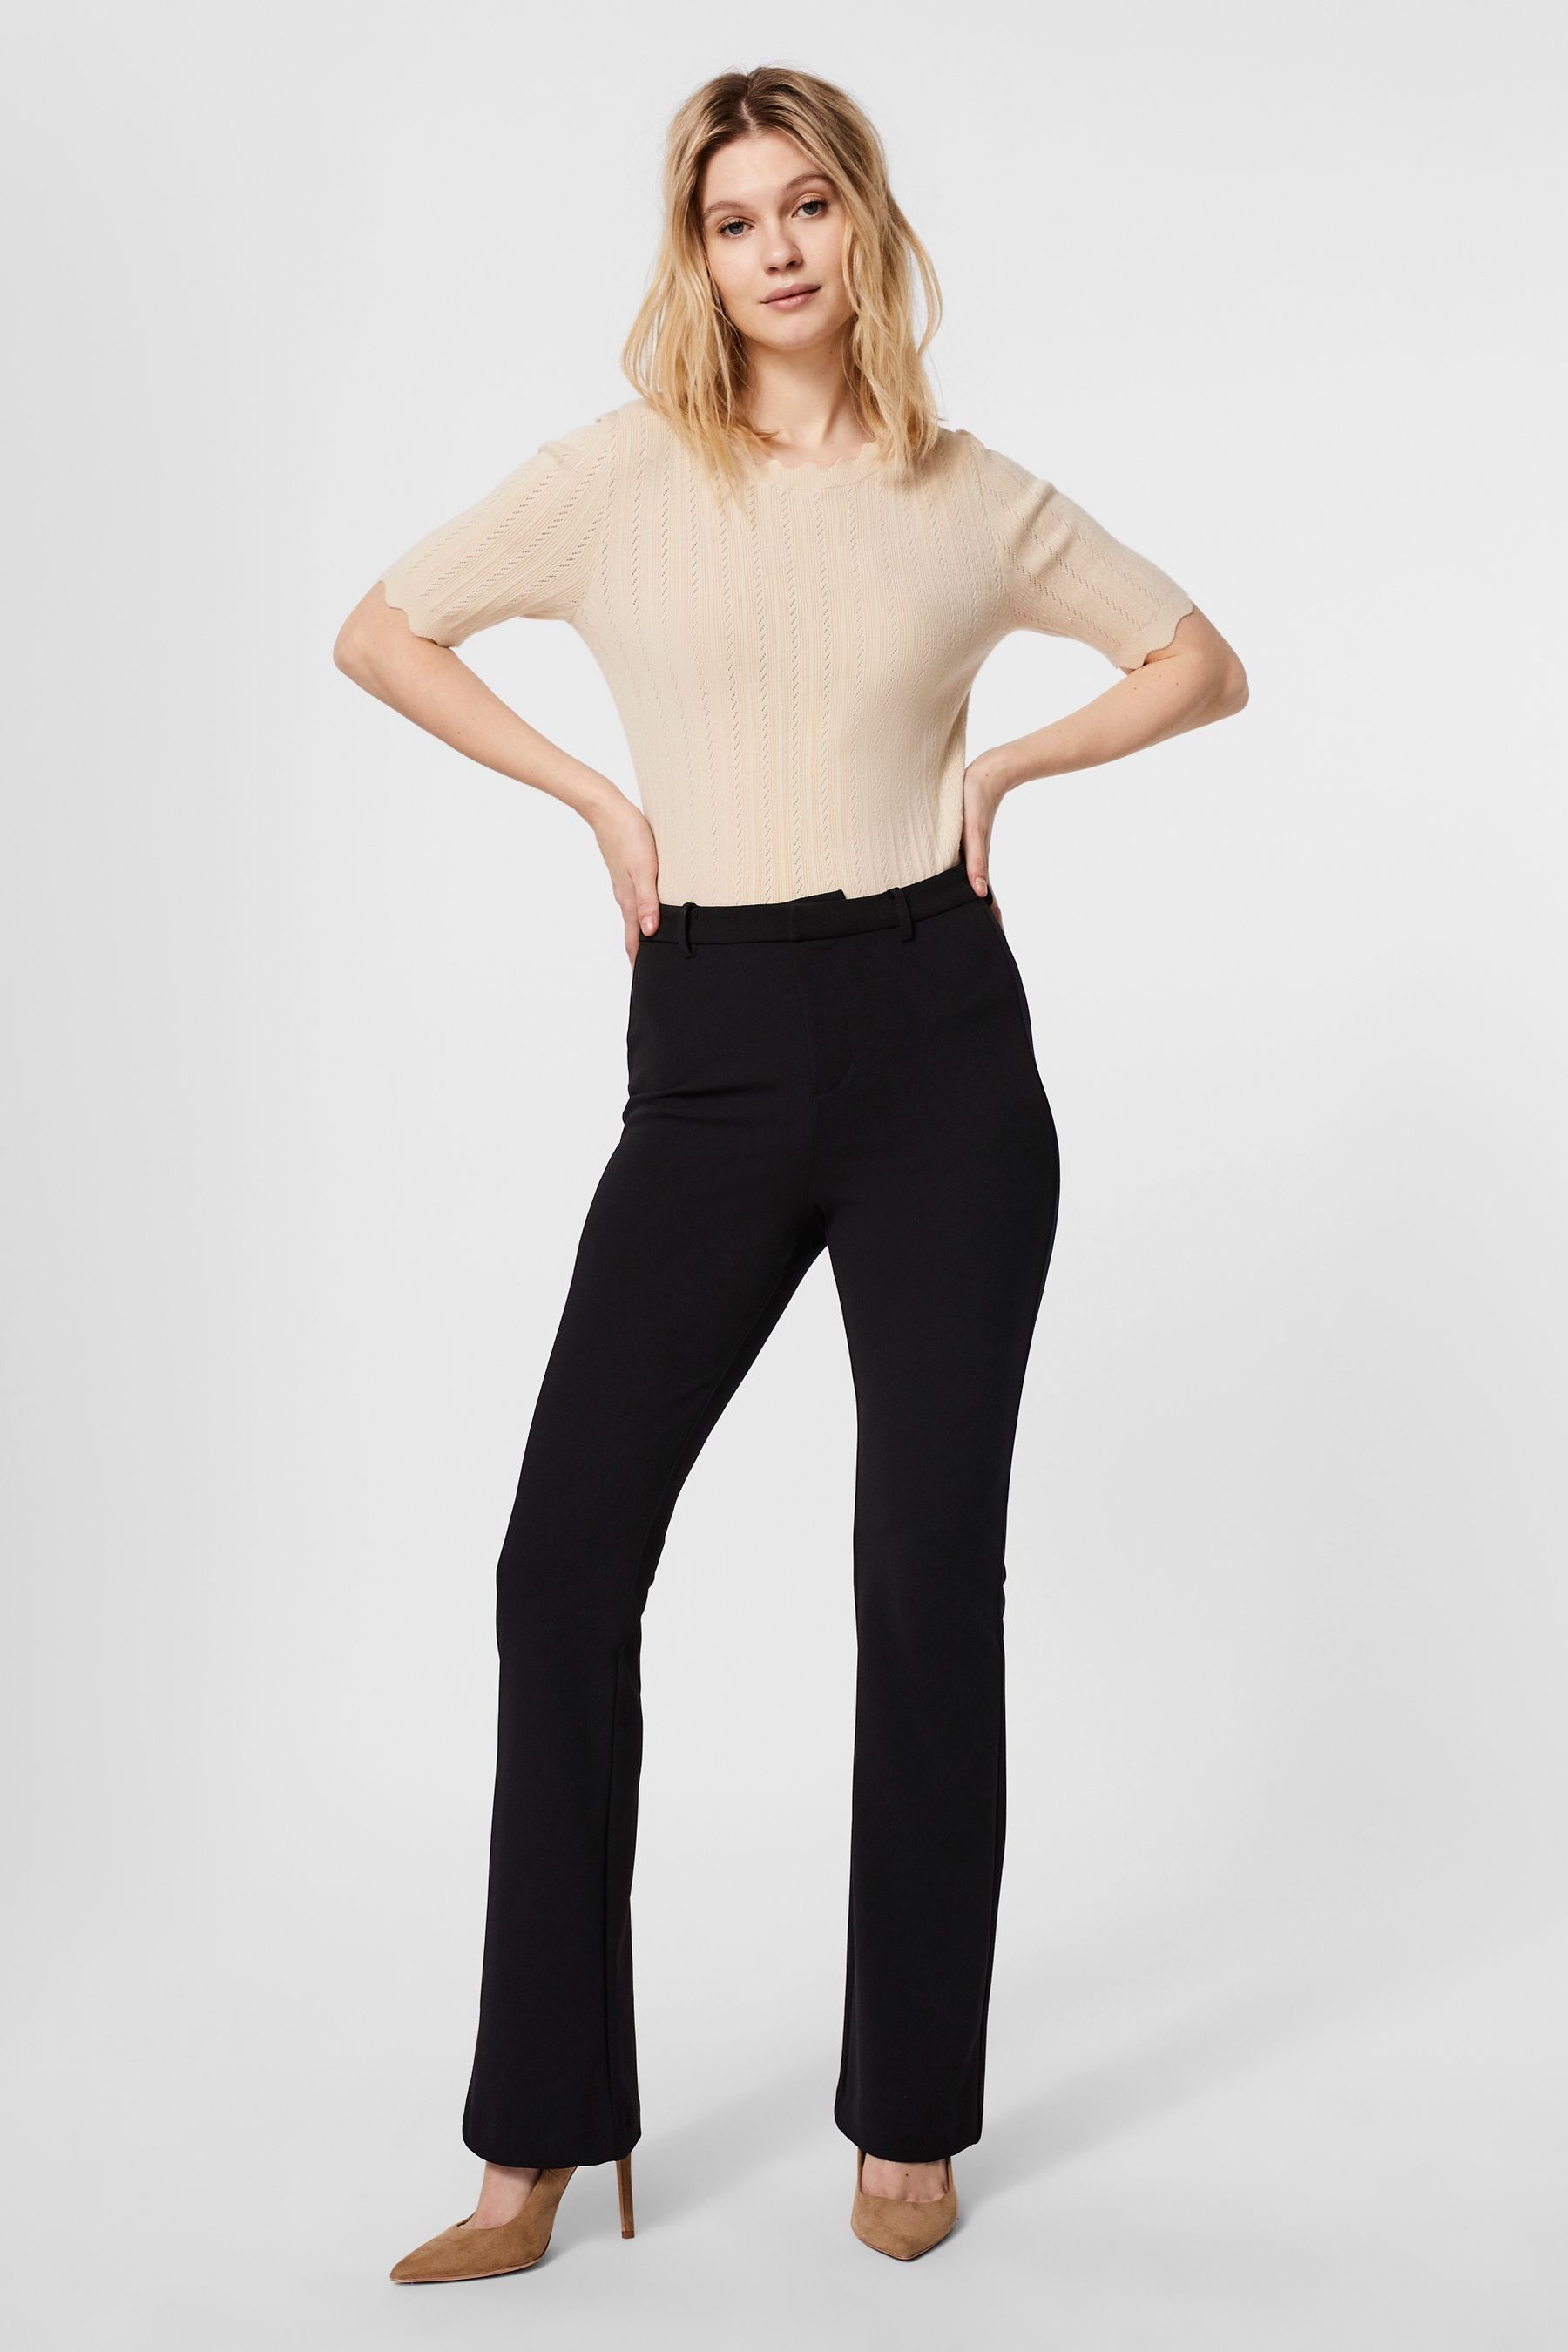 Buy VERO MODA Black Solid Poly Blend Skinny Fit Women's Pants | Shoppers  Stop